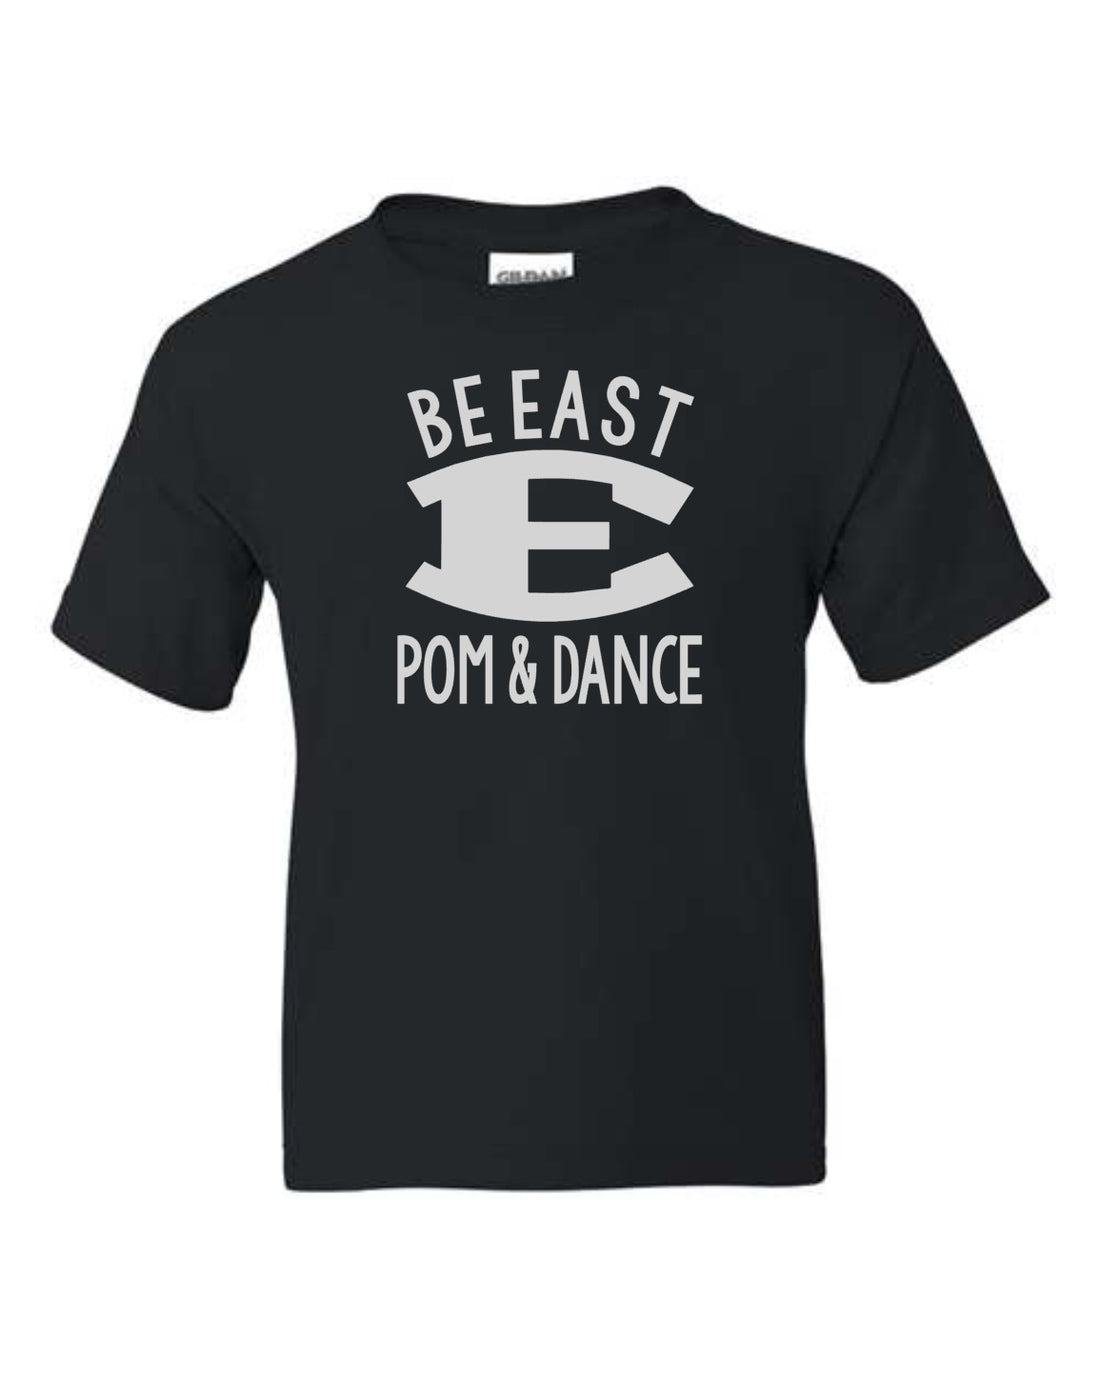 Be East Pom & Dance Tee